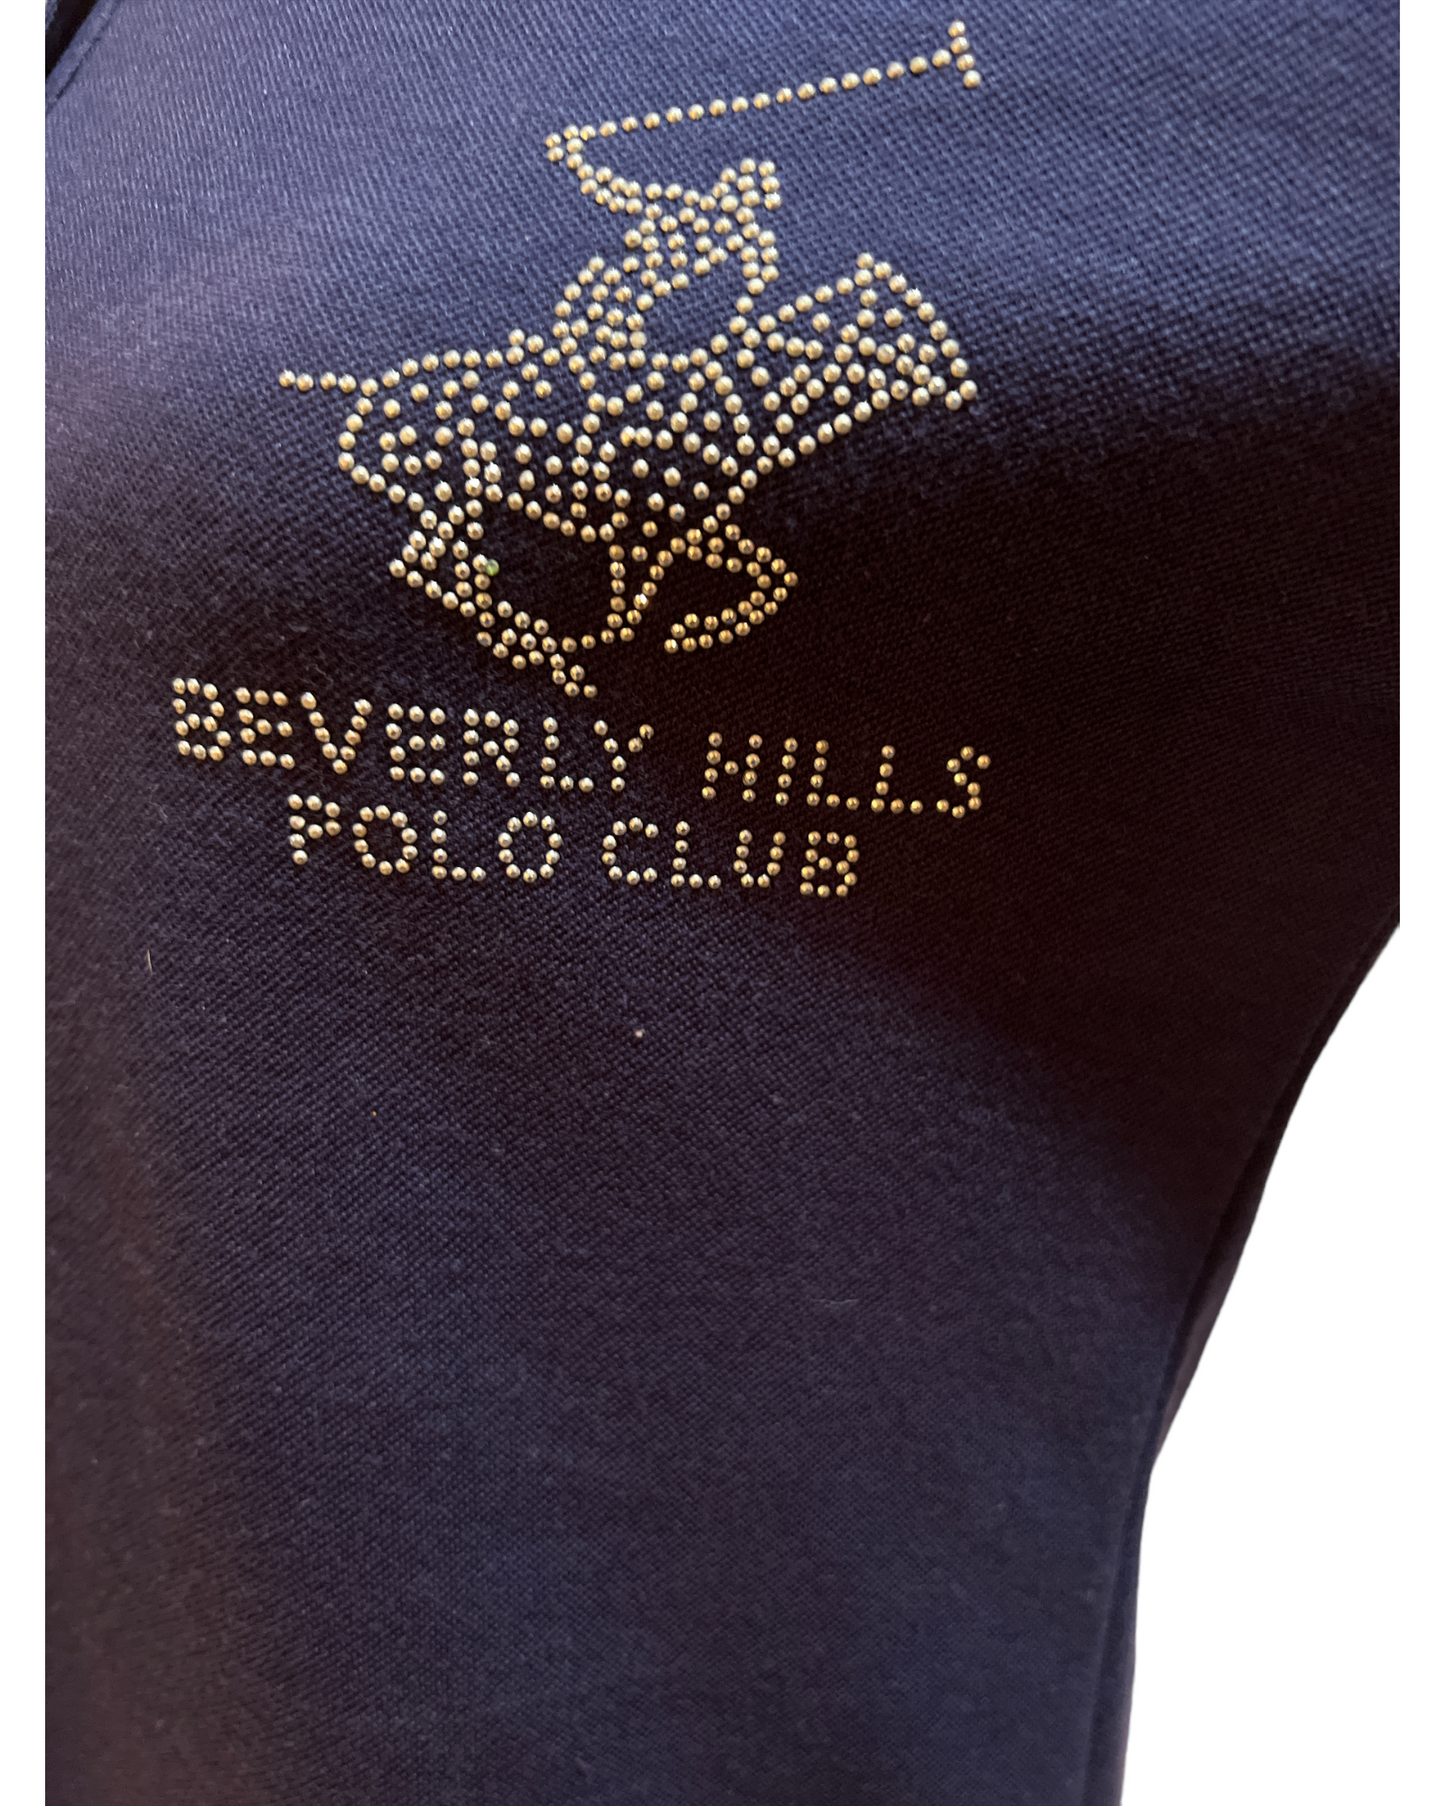 Beverly Hills Polo Club Shirt